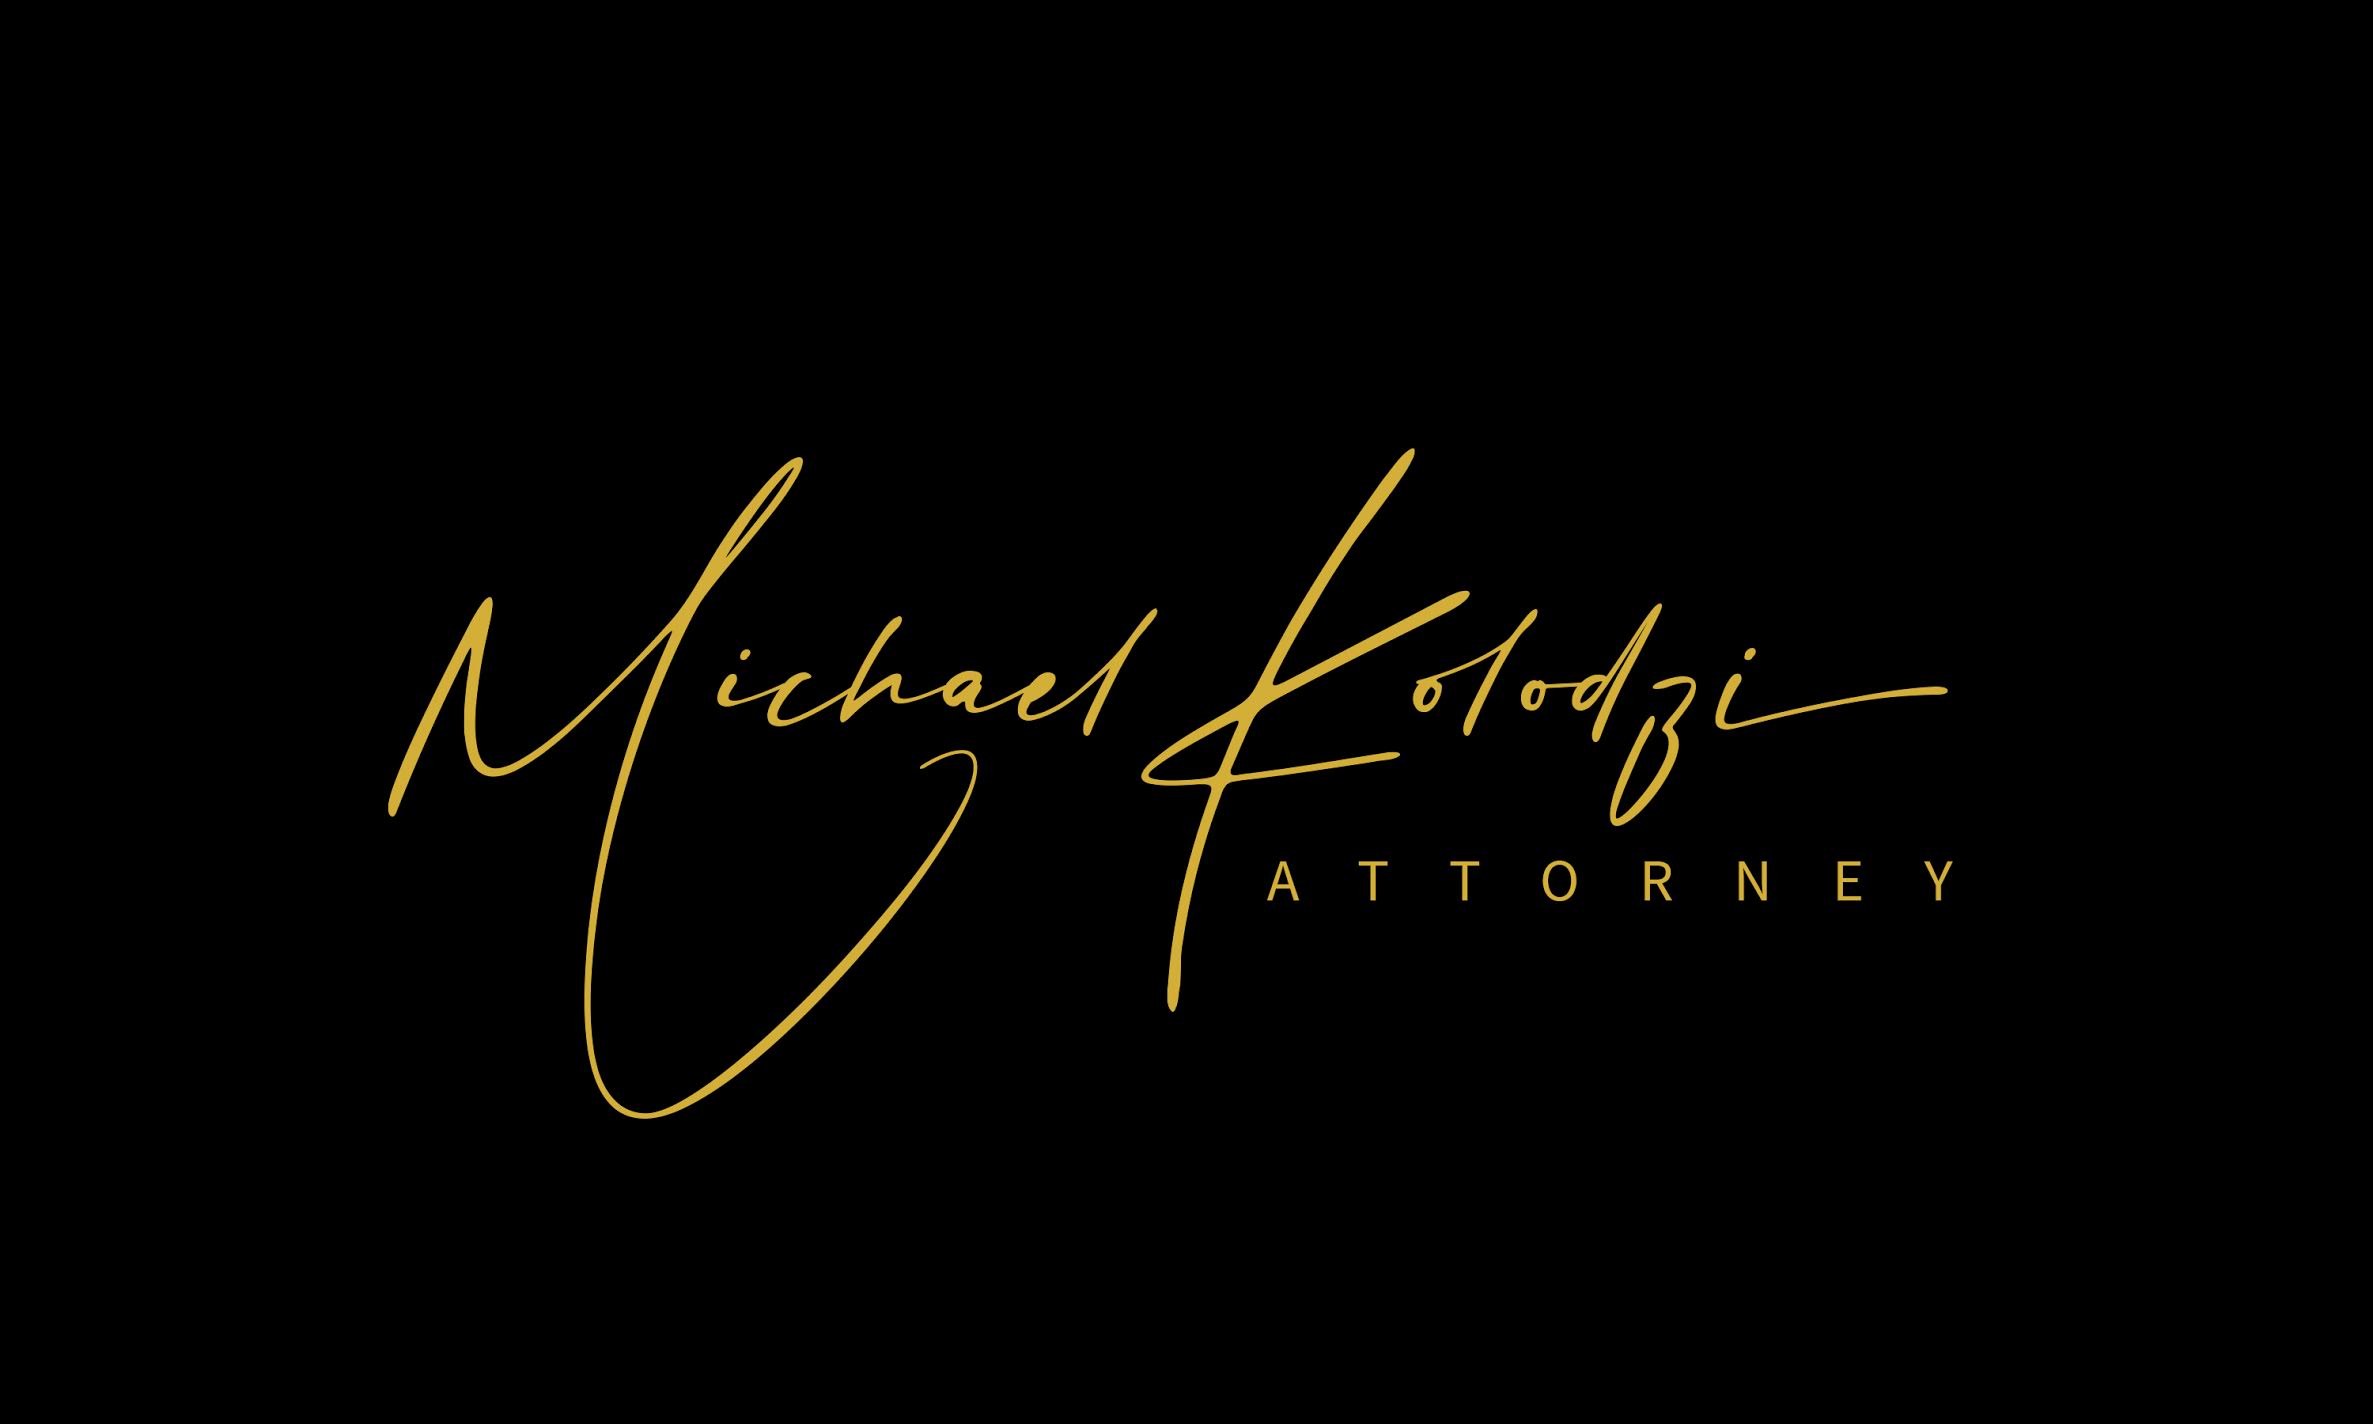 Michael D. Kolodzi Attorney at Law 